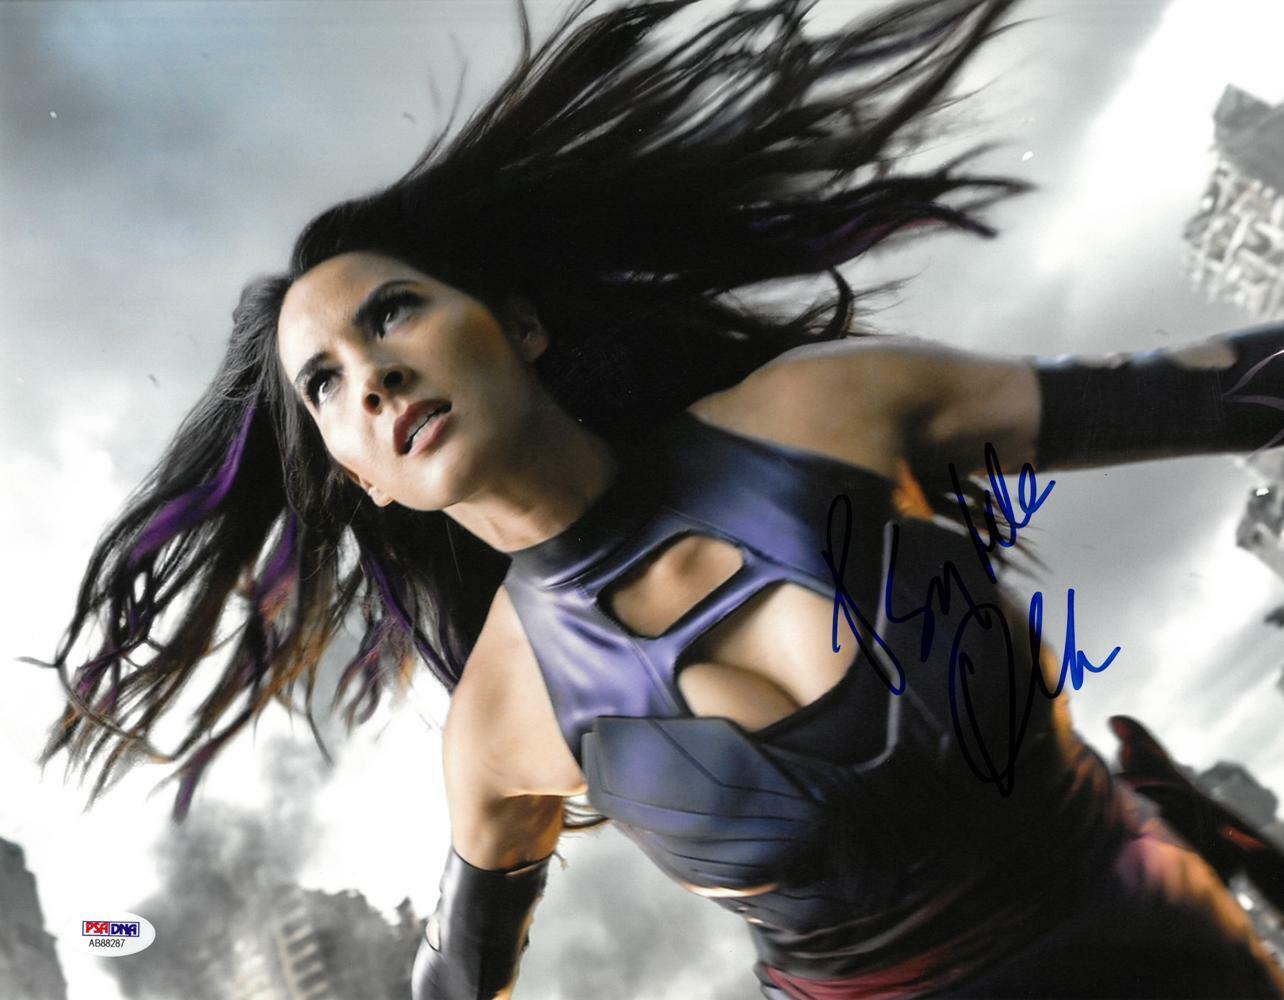 Olivia Munn Signed X-Men Apocalypse Autographed 11x14 Photo Poster painting PSA/DNA #AB88287